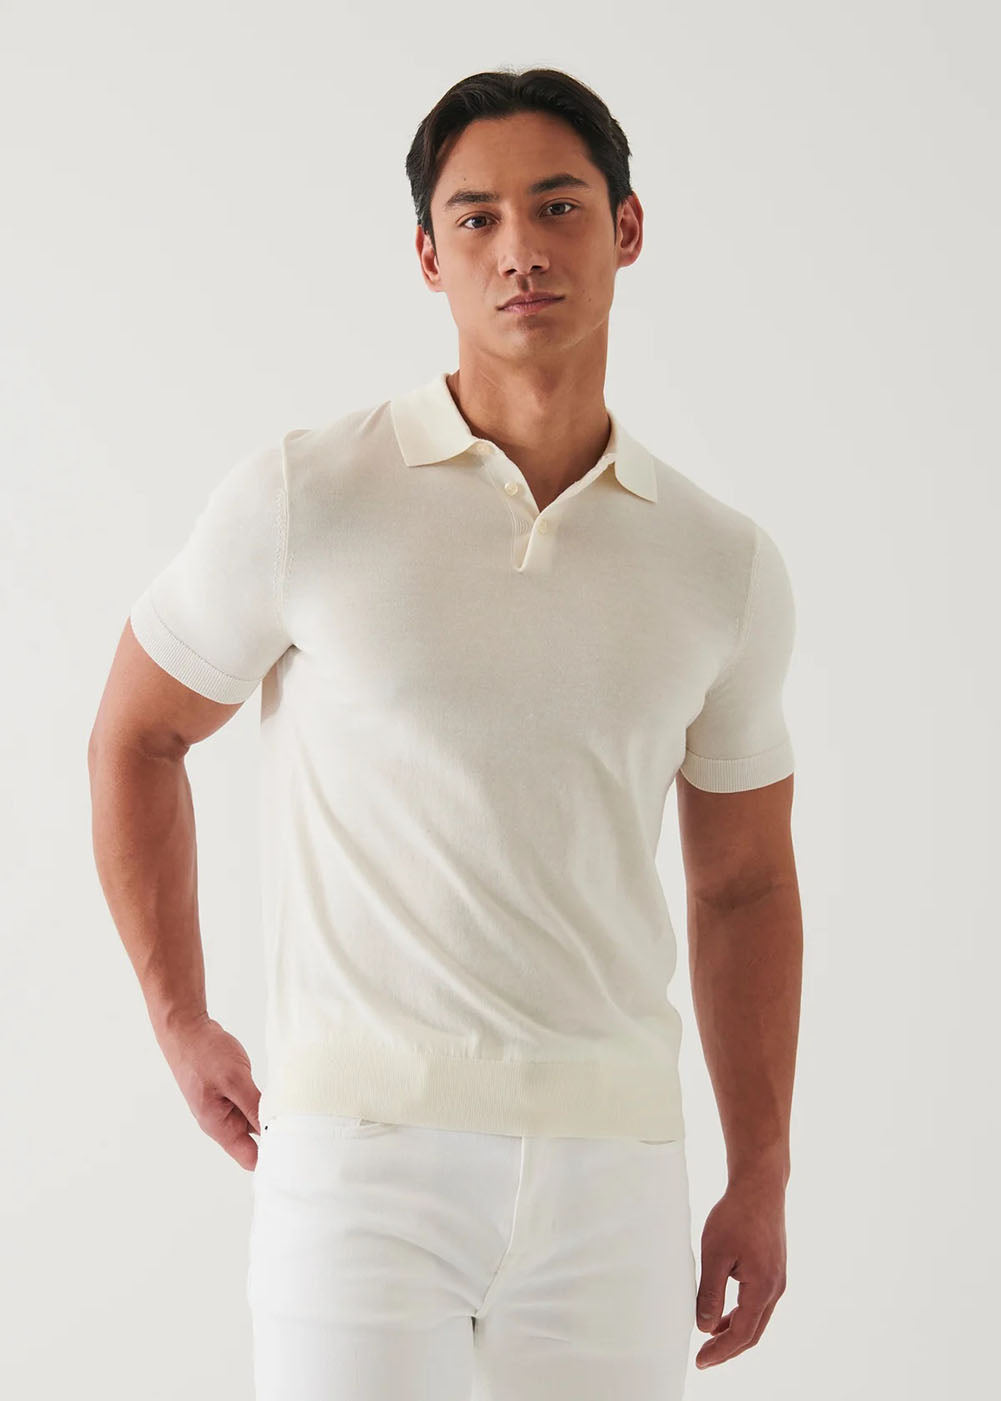 Cotton Cupro 3 Button Polo T-Shirt - White - Patrick Assaraf Canada - Danali - P154P15R